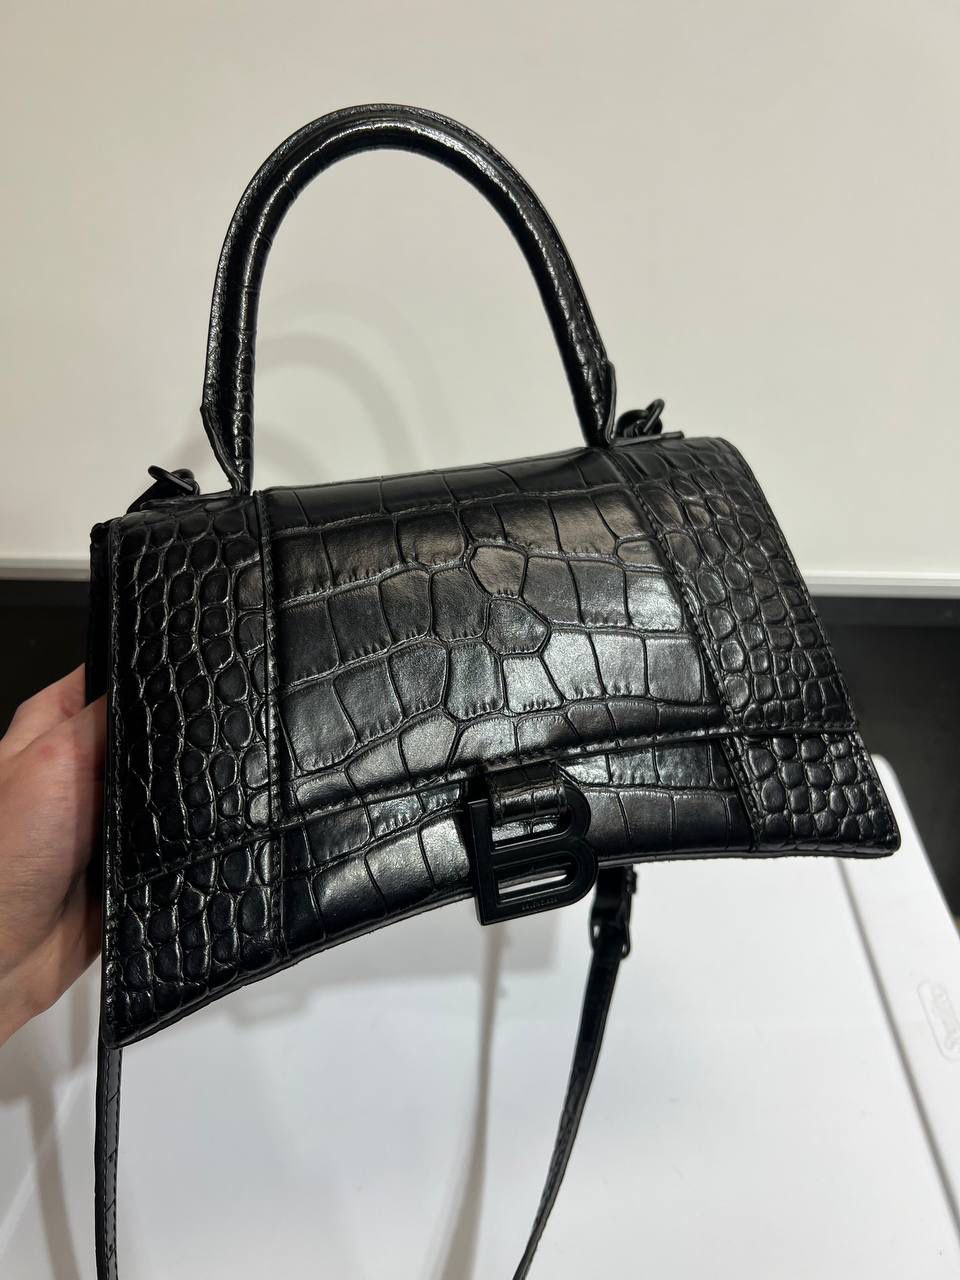 Balenciaga Medium Hourglass Croc-Embossed Leather Top Handle Bag